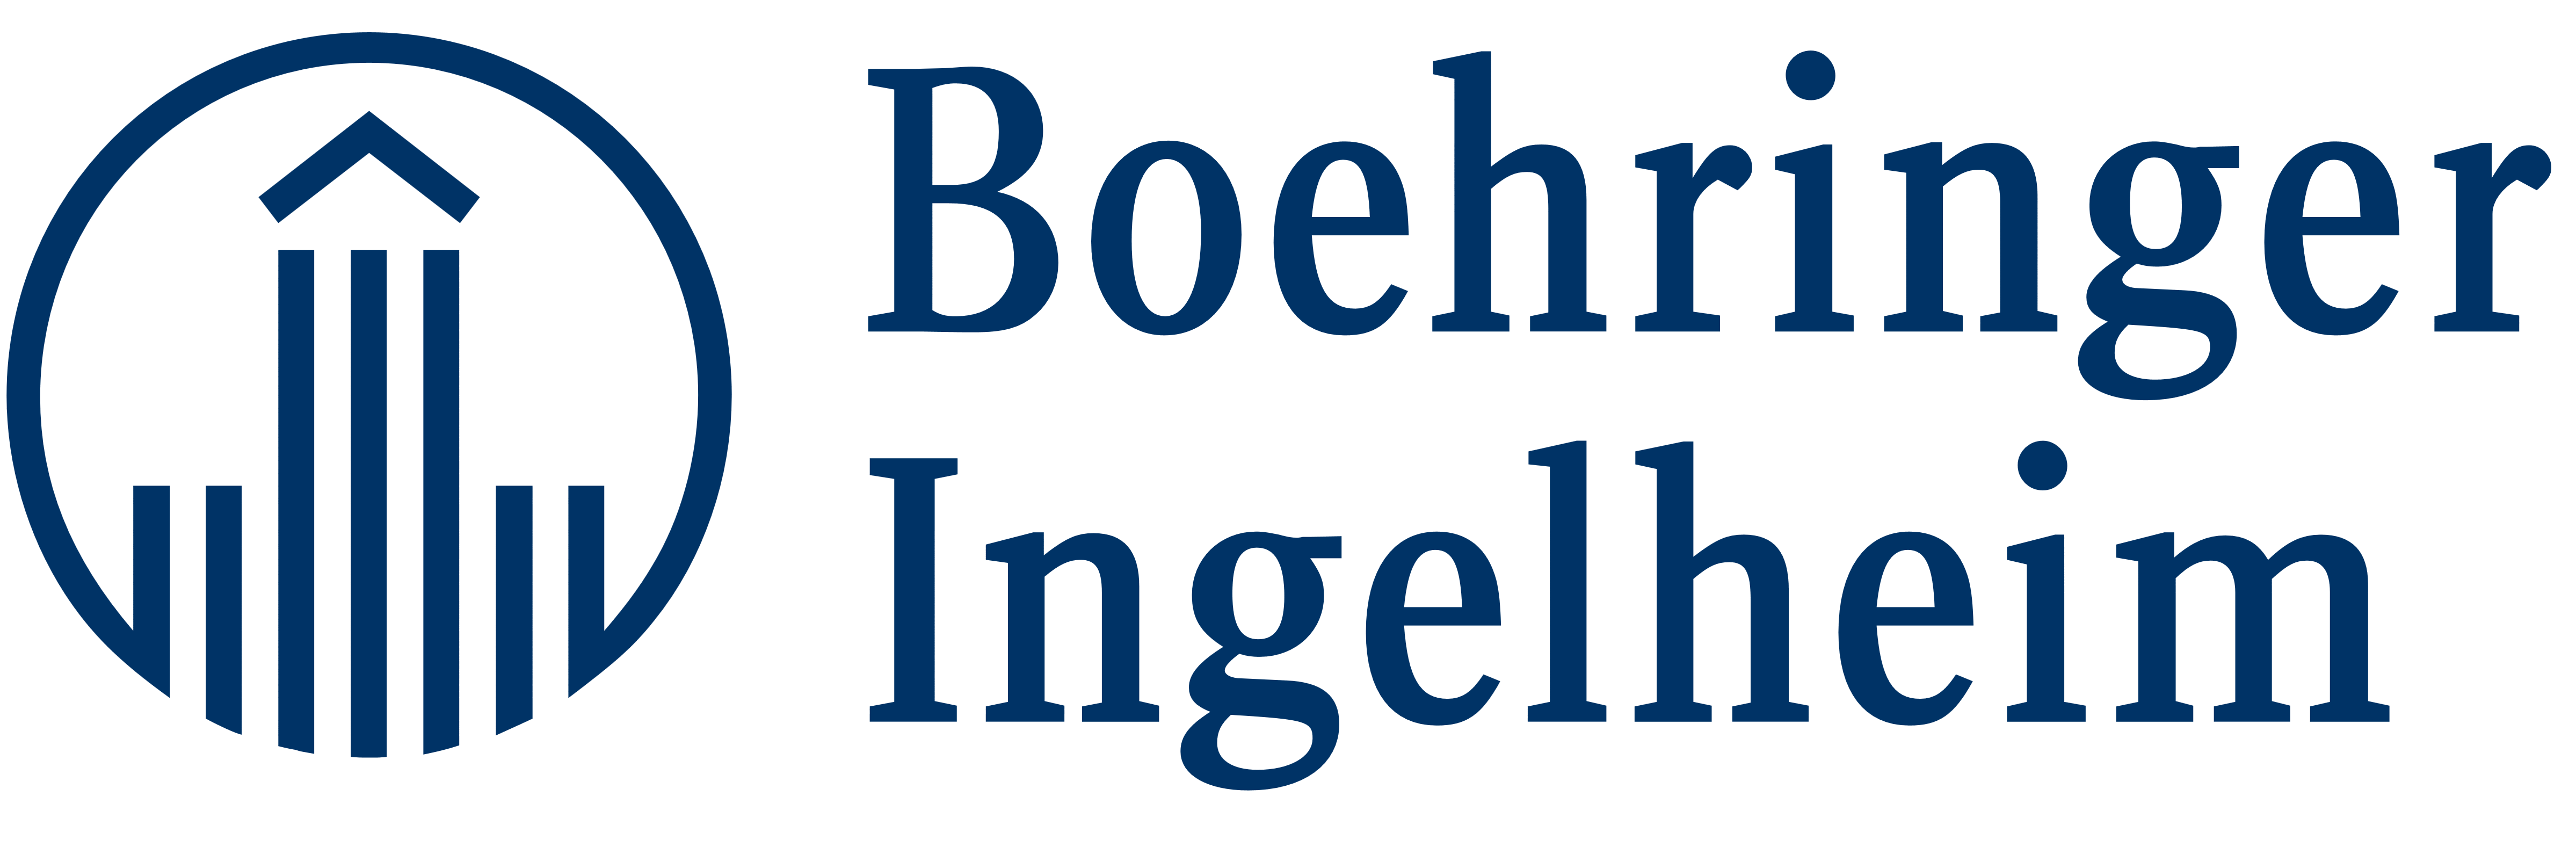 boehringer-ingelheim-logo-logotype